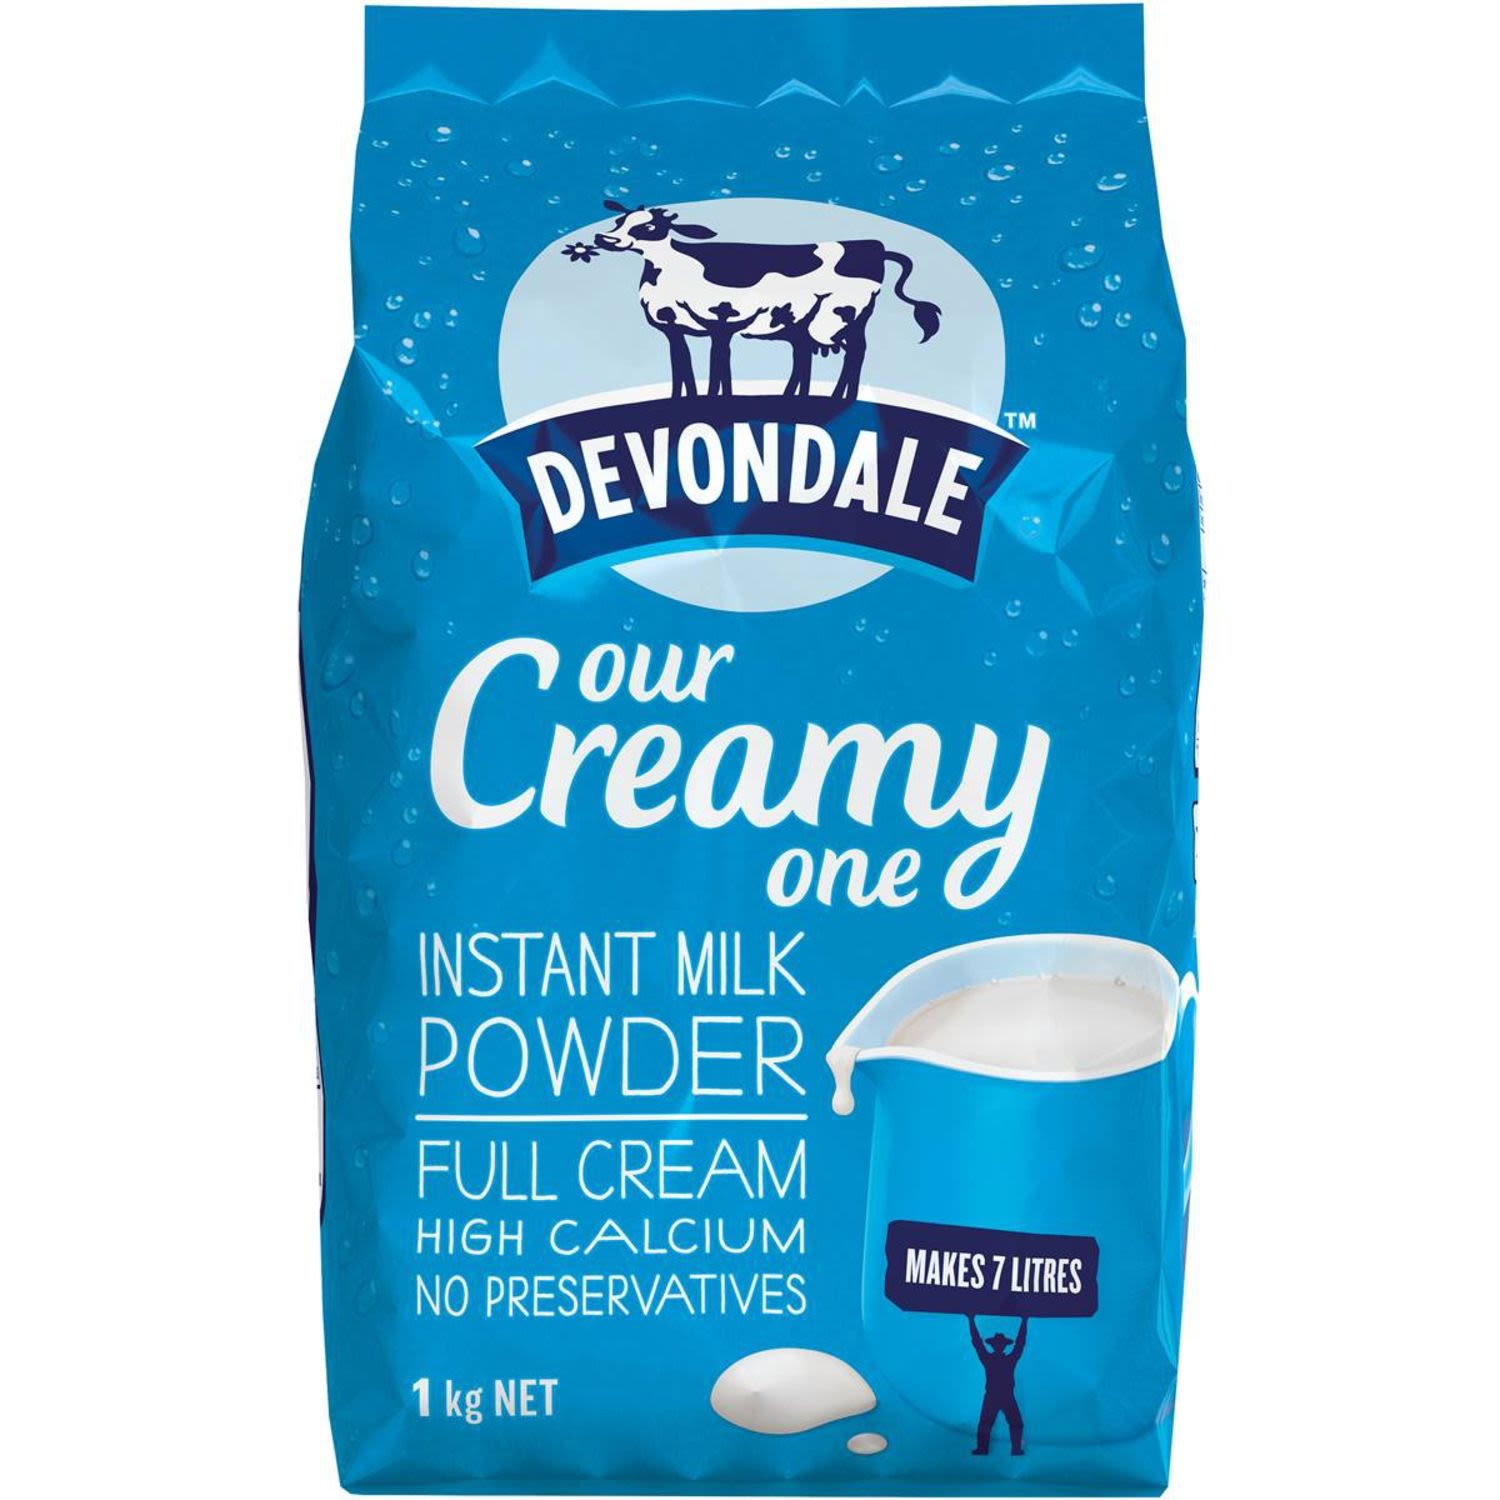 Devondale Instant Milk Powder Full Cream, 1 Kilogram